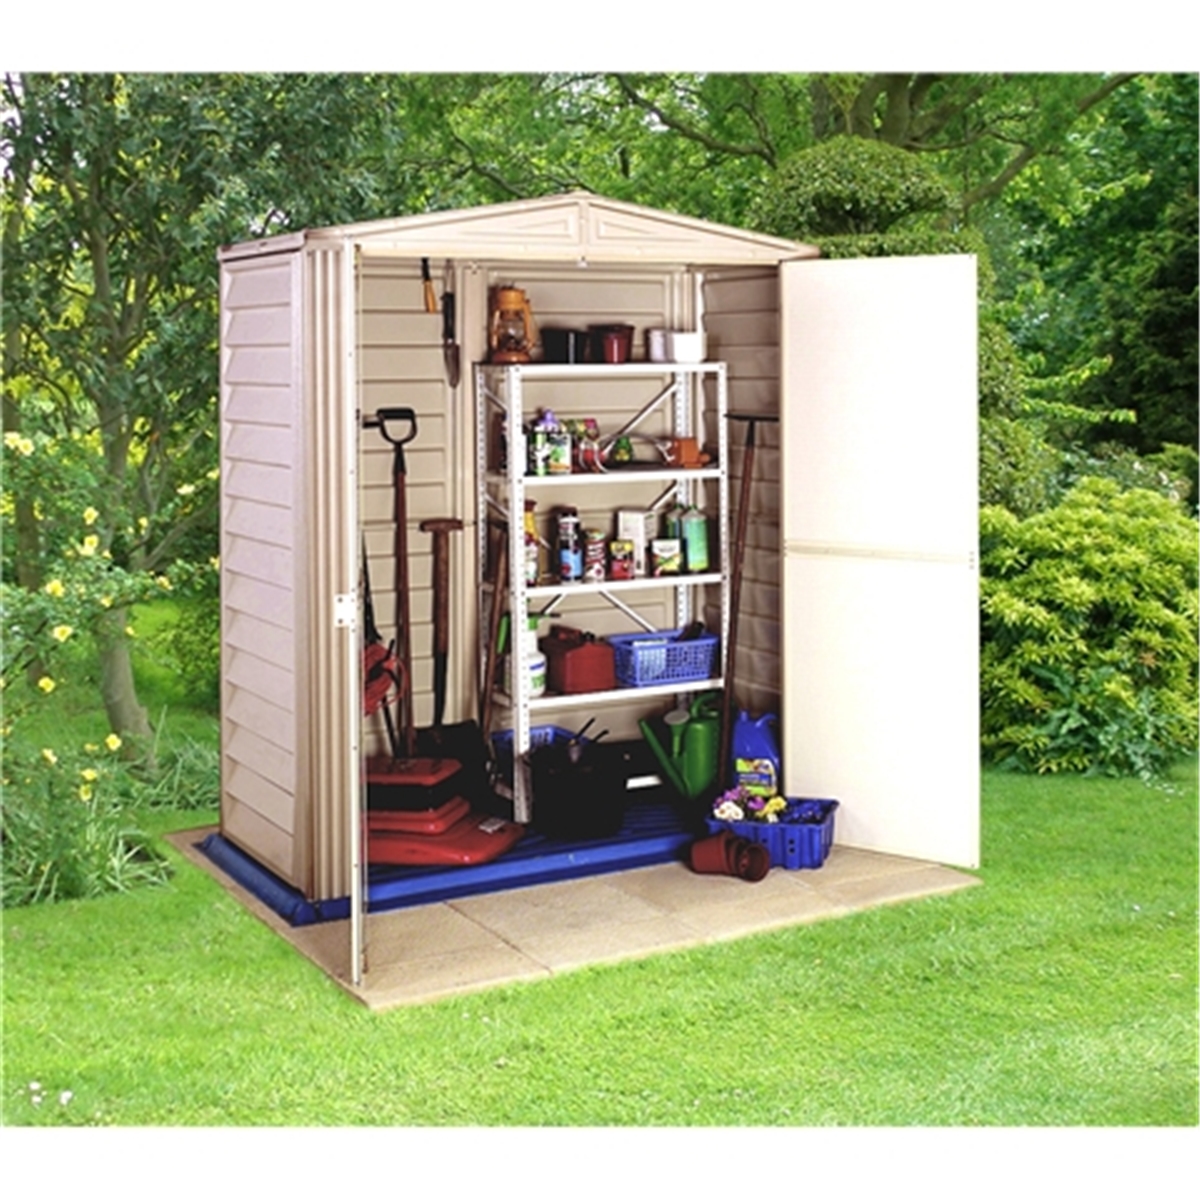 diy storage shed // bike shed // garden shed - youtube